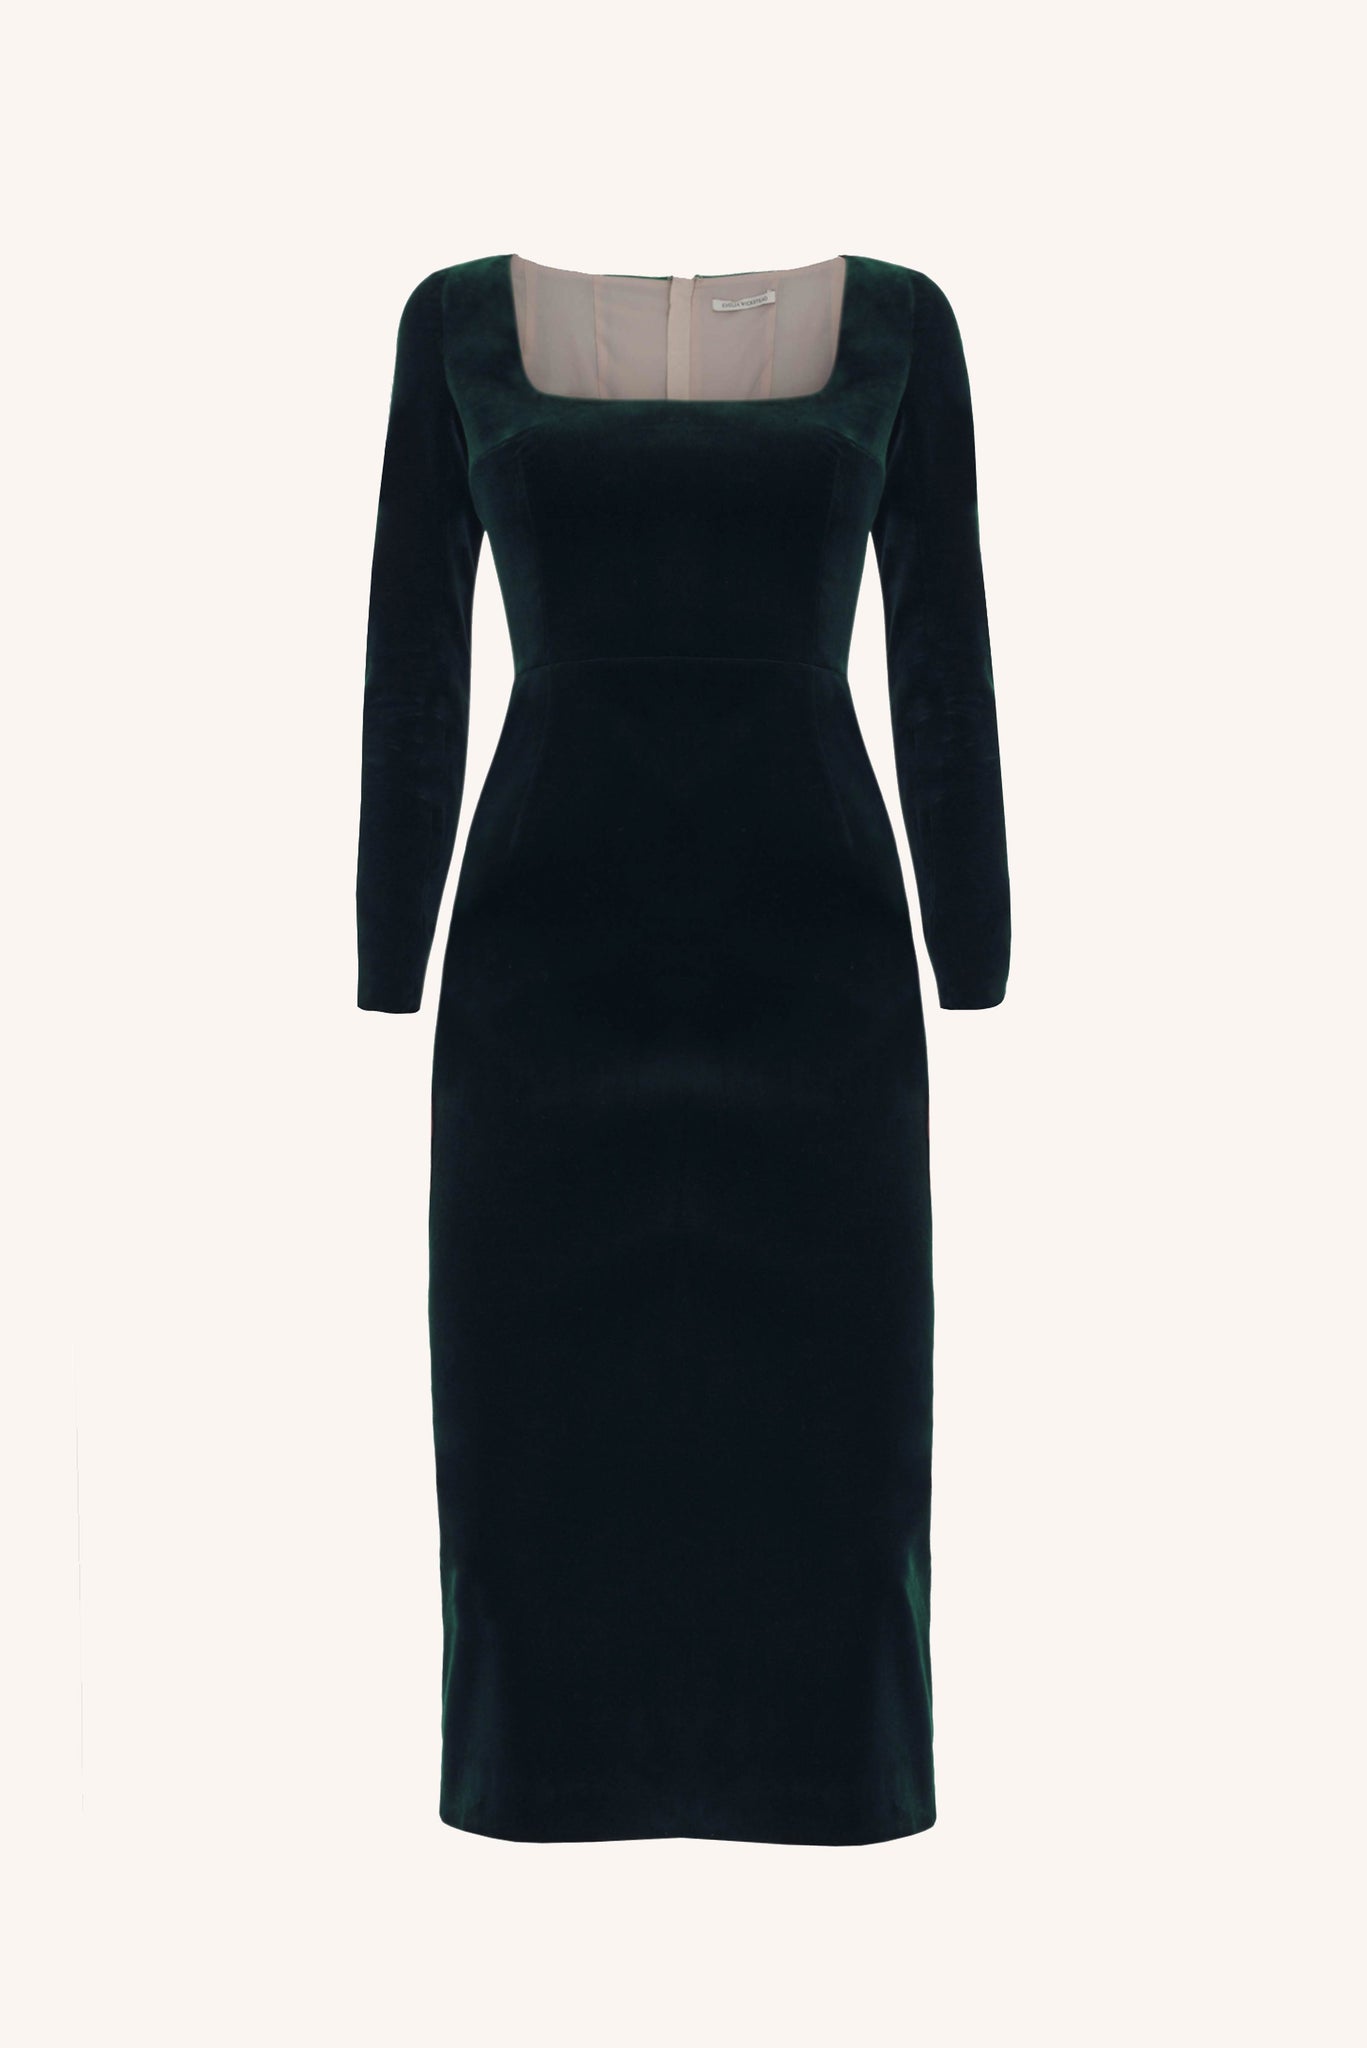 Nyla Dress | Dark Green Velvet Square Neck Pencil Dress | Emilia Wickstead